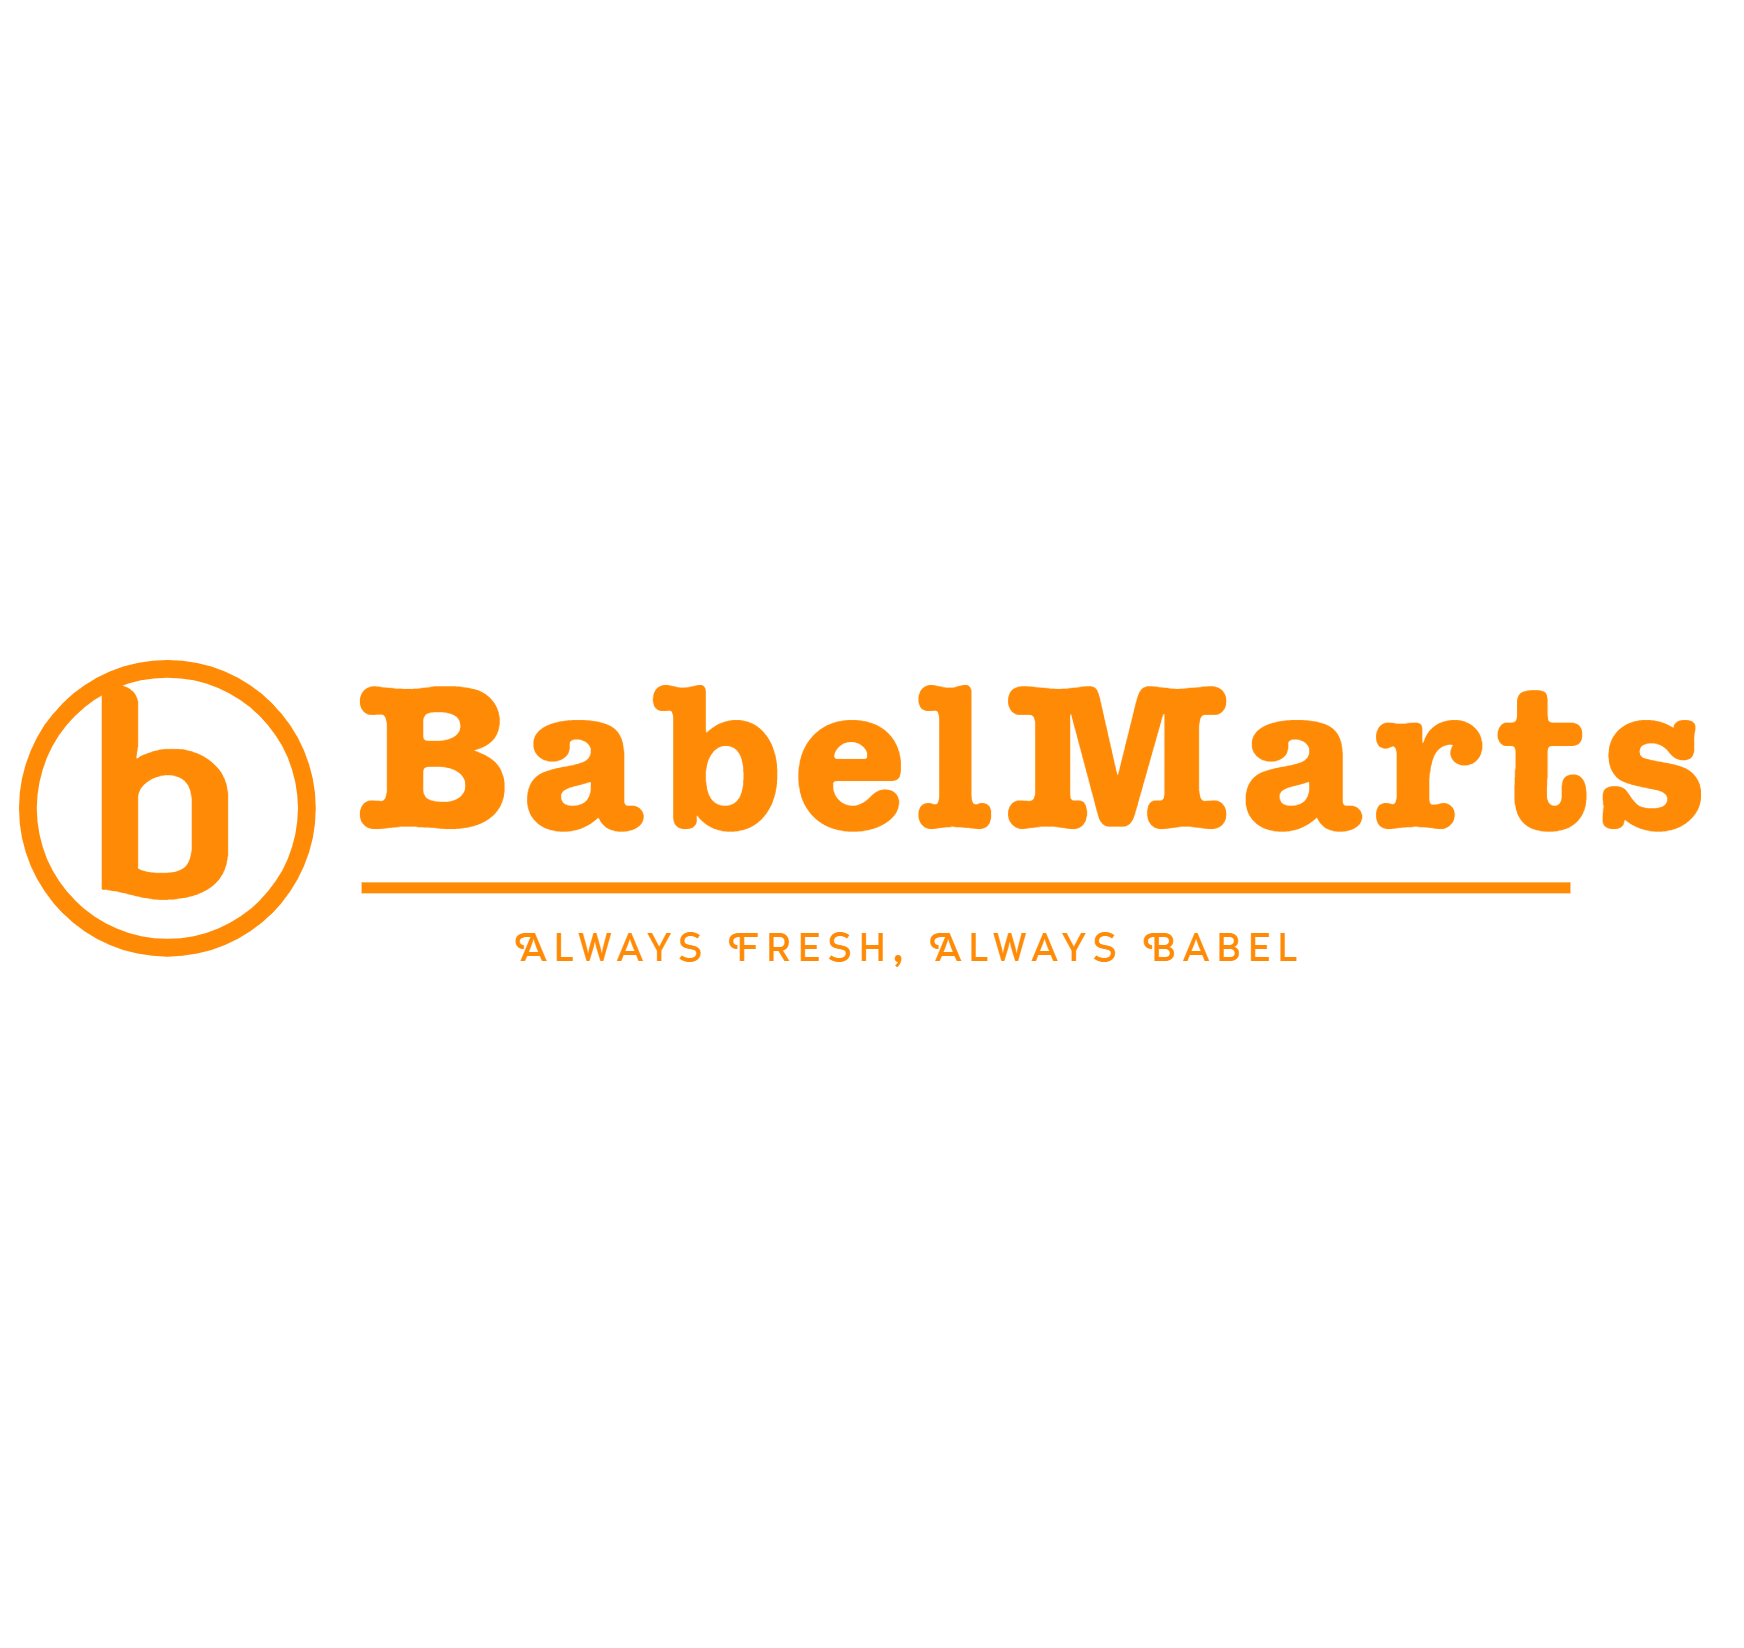 Babel Marts